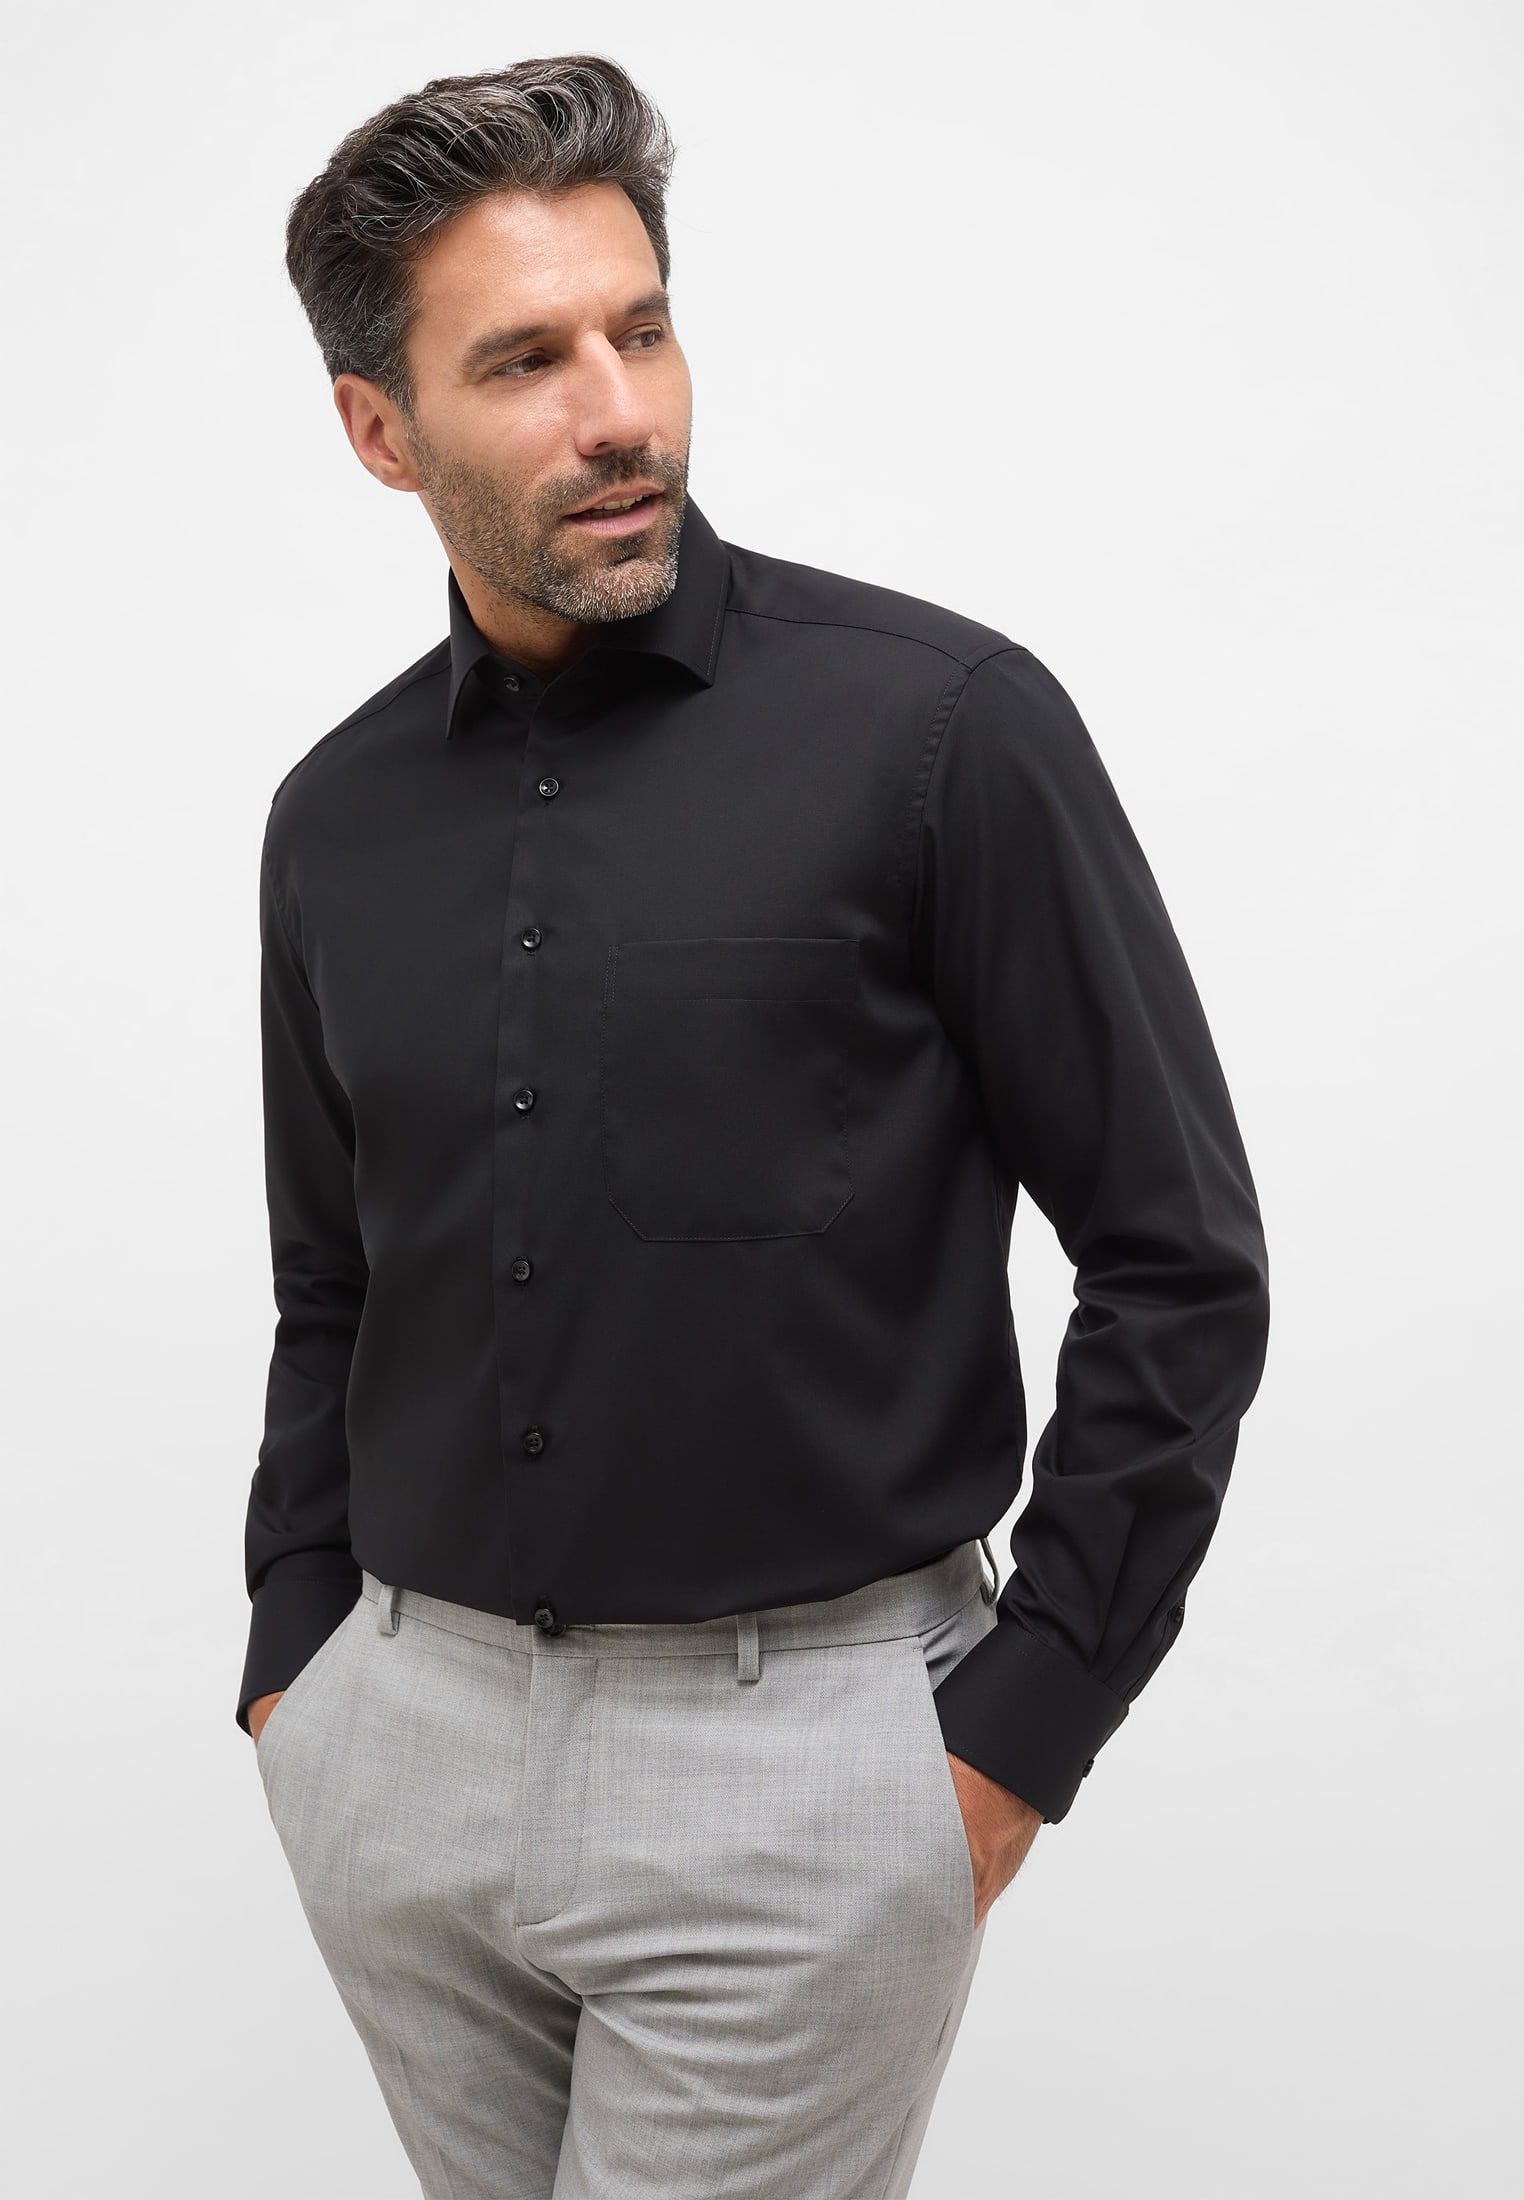 COMFORT FIT Original Shirt in schwarz unifarben | schwarz | 45 | Langarm |  1SH11781-03-91-45-1/1